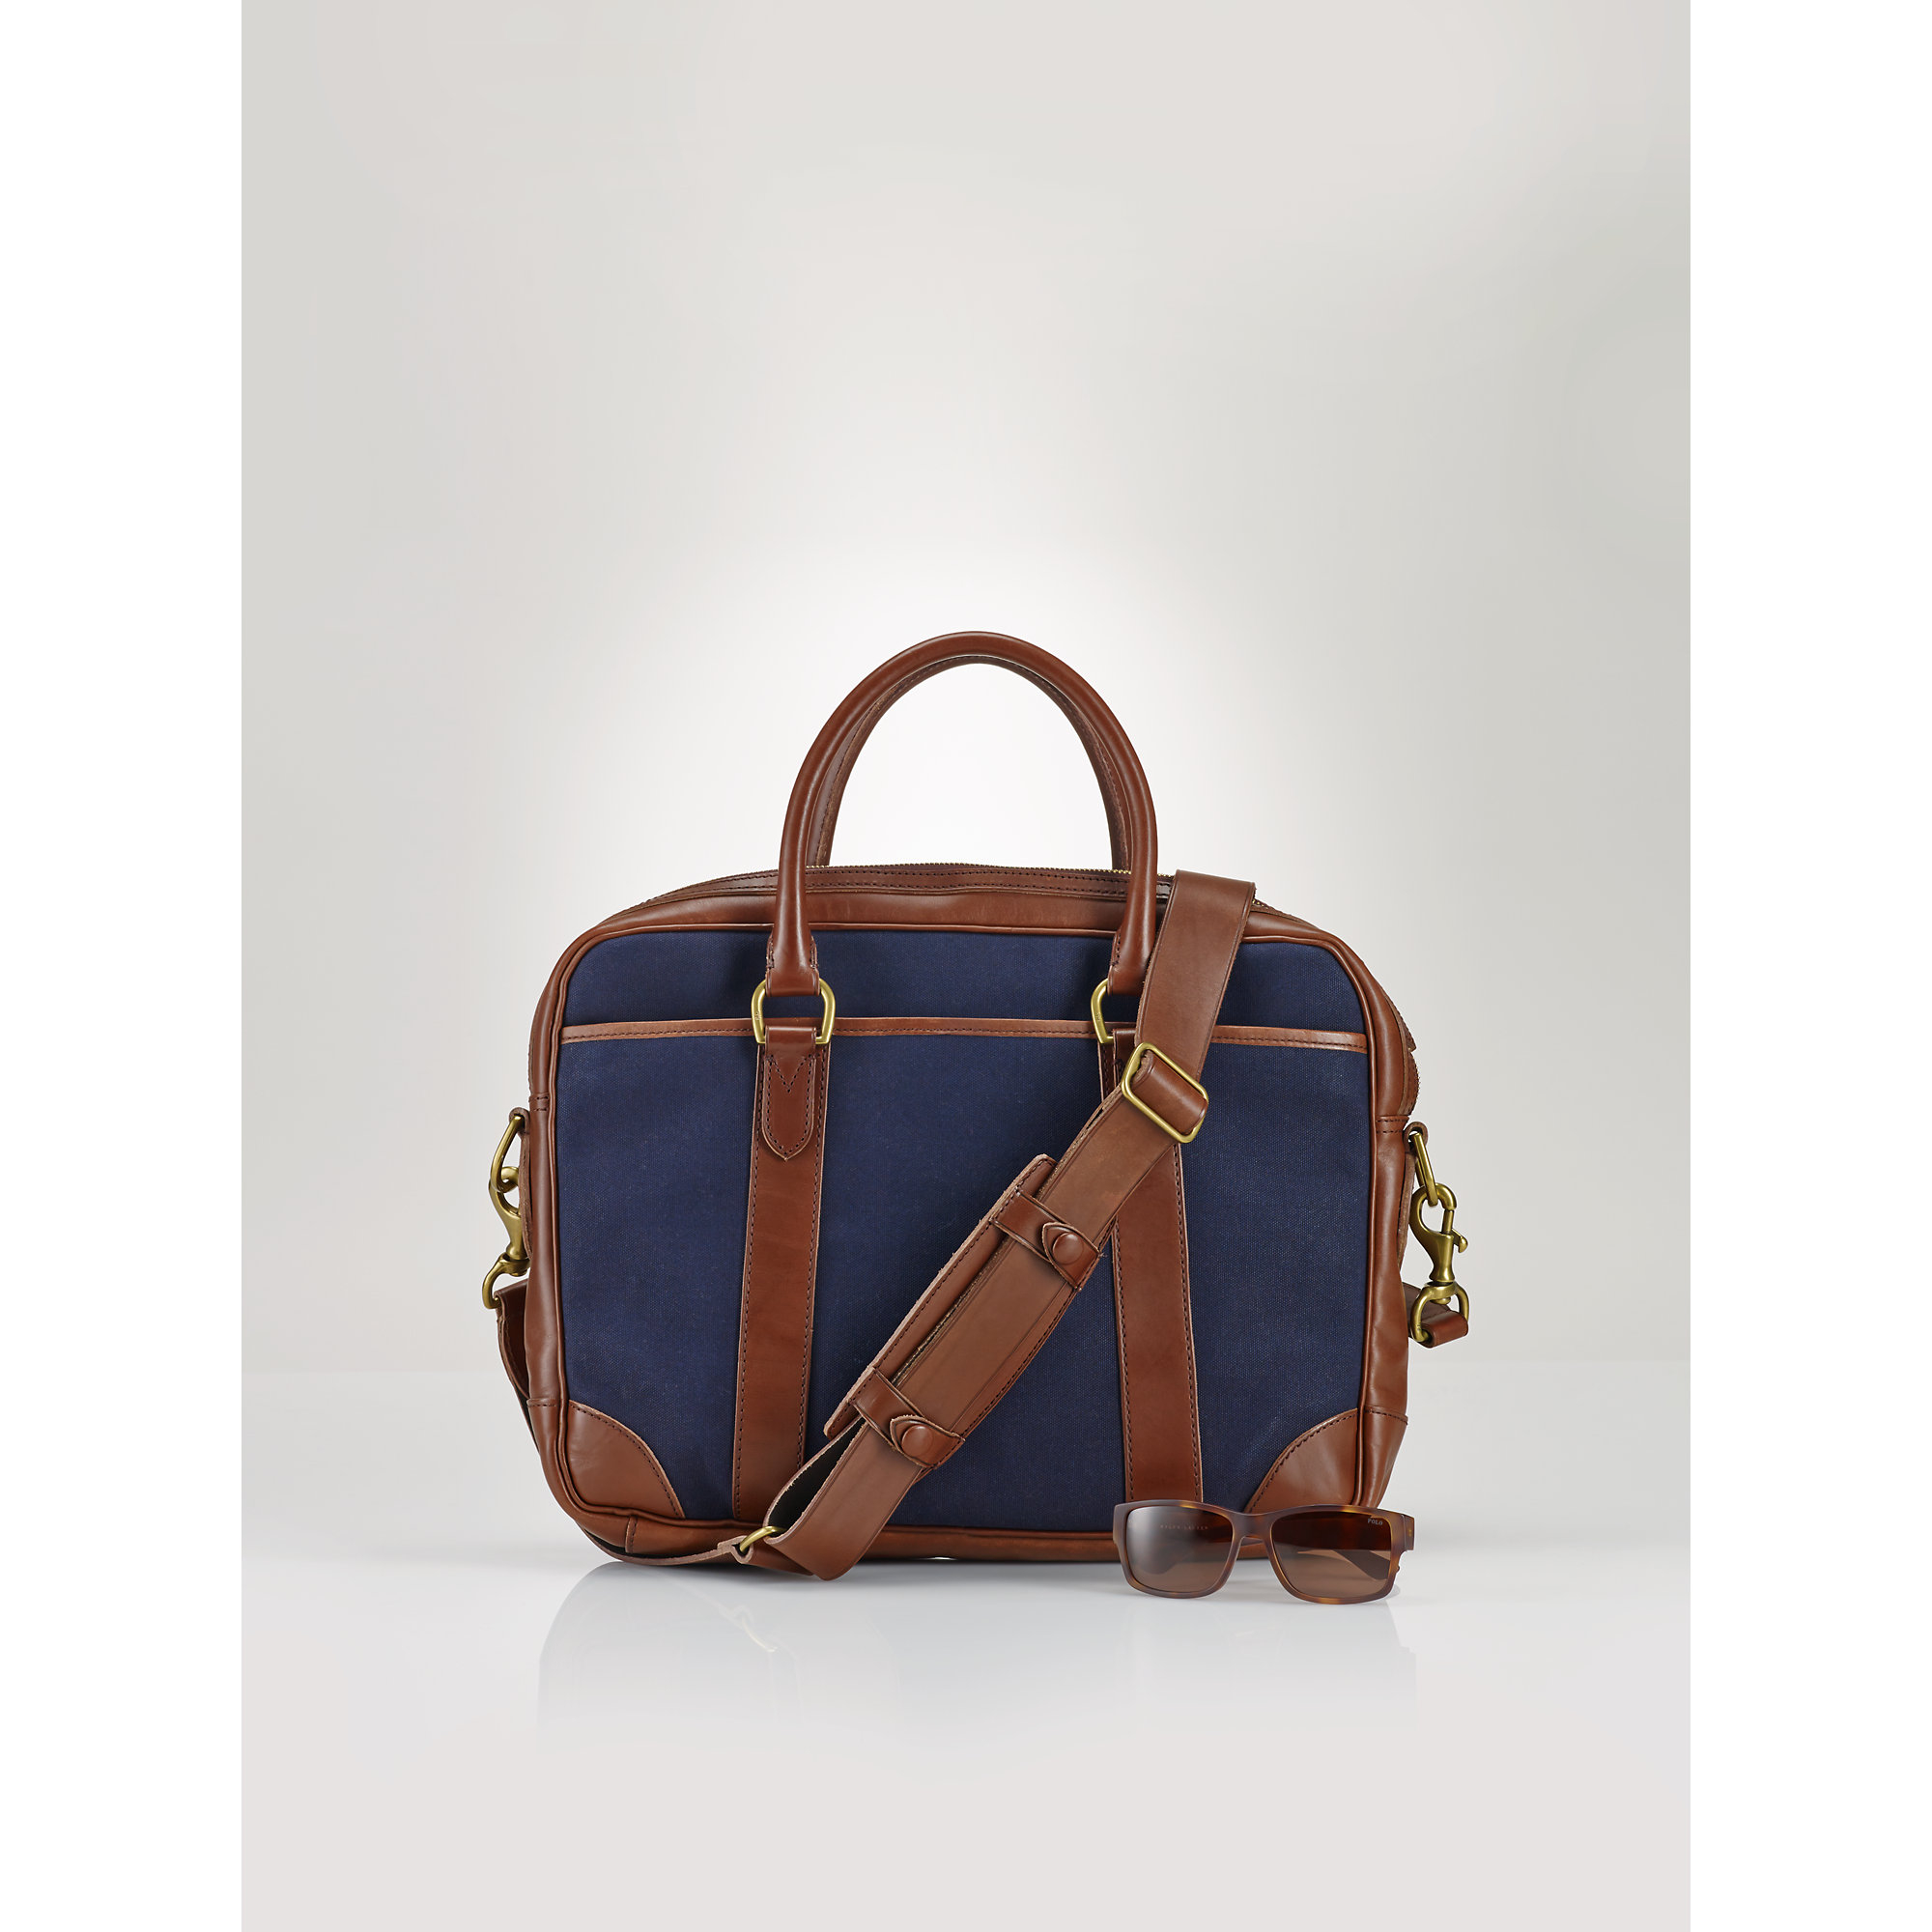 Lyst - Polo Ralph Lauren Leather-trim Commuter Bag in Blue for Men